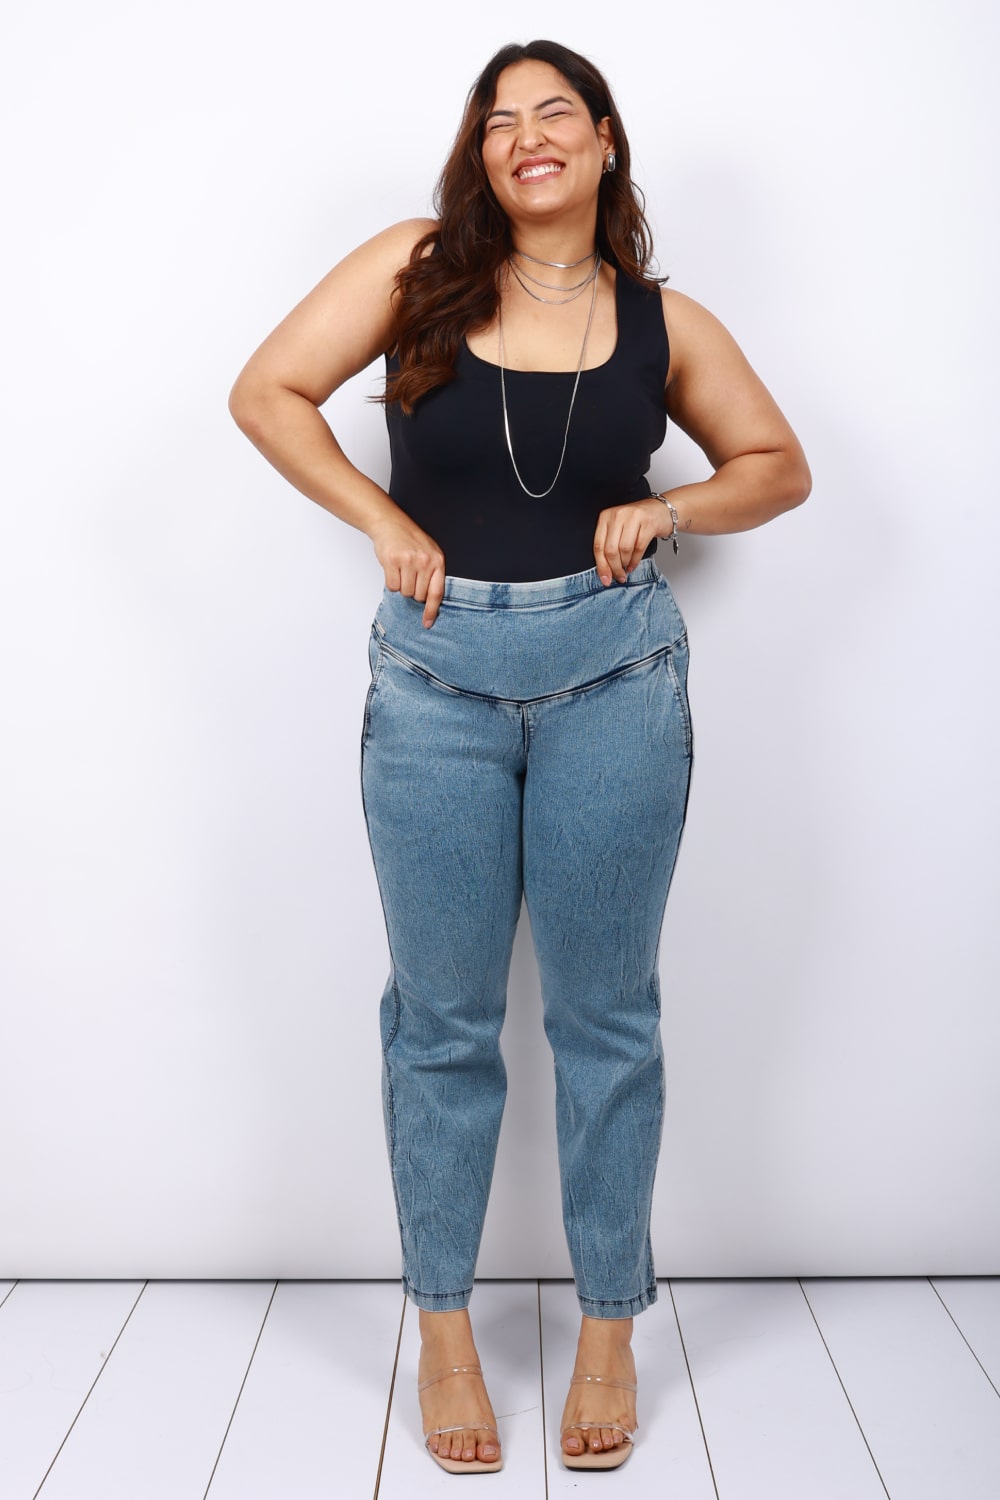 42 Size Jeans - Buy Women Stylish 2XL Jeans Online